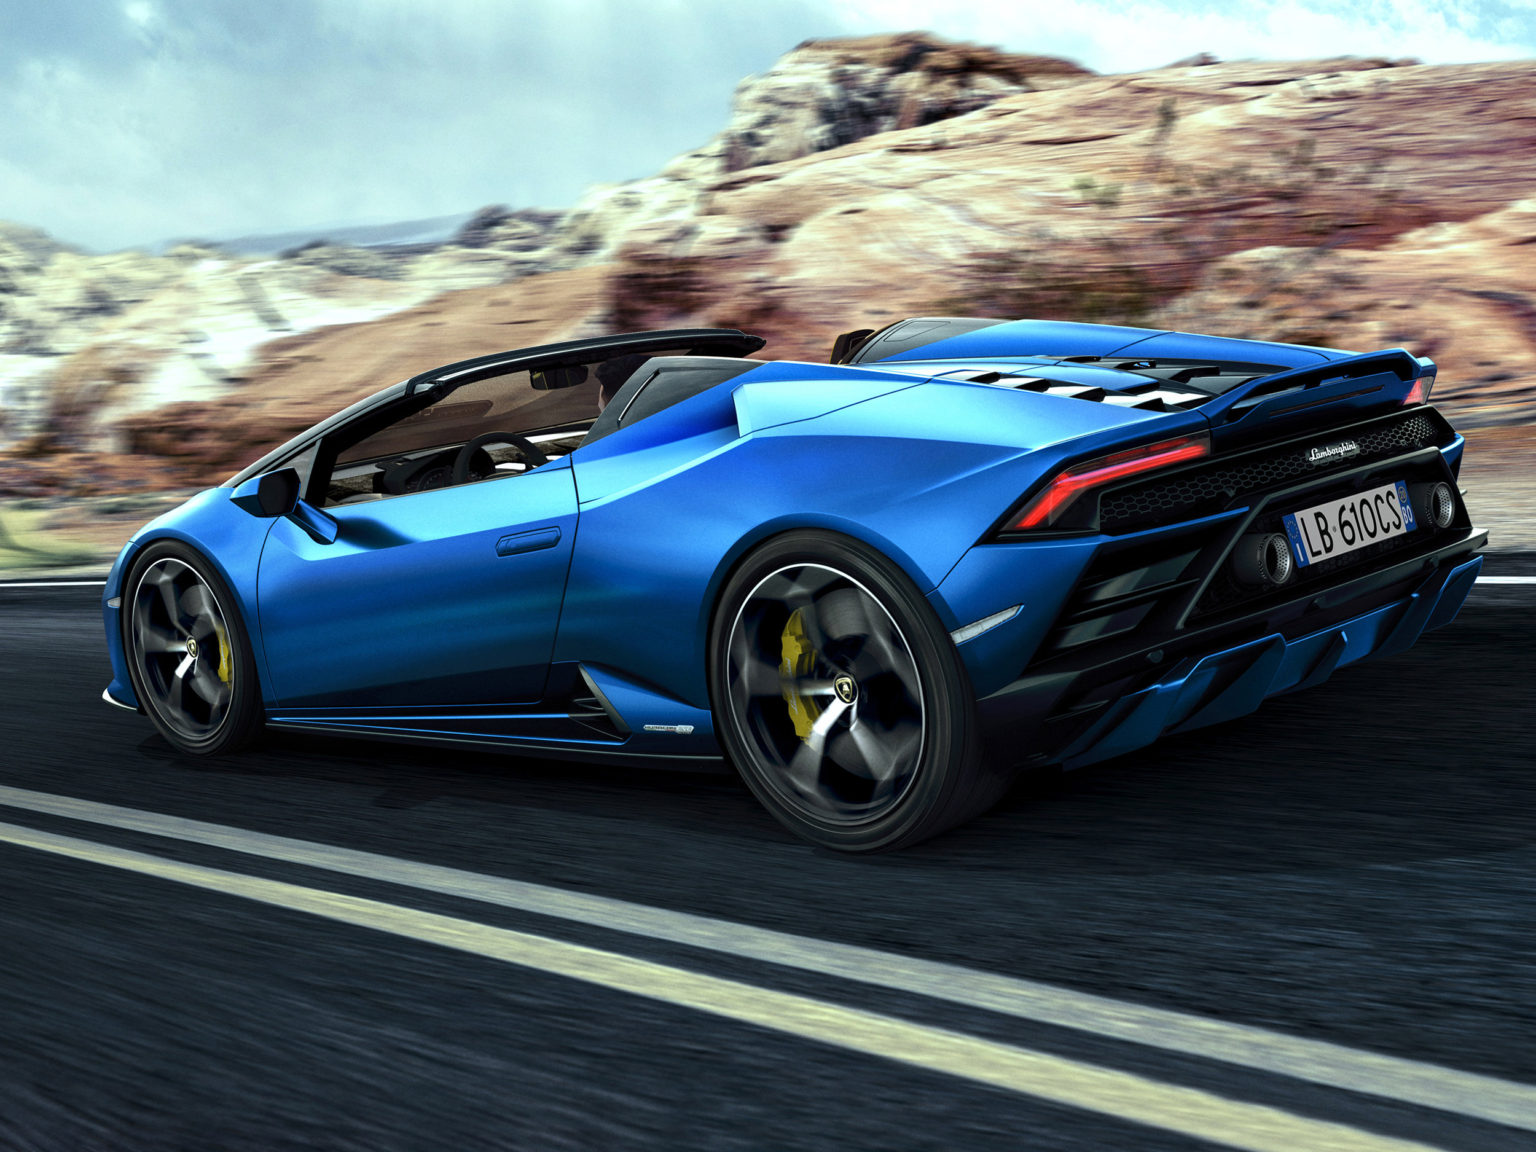 Lamborghini has debuted its new car using augmented reality.